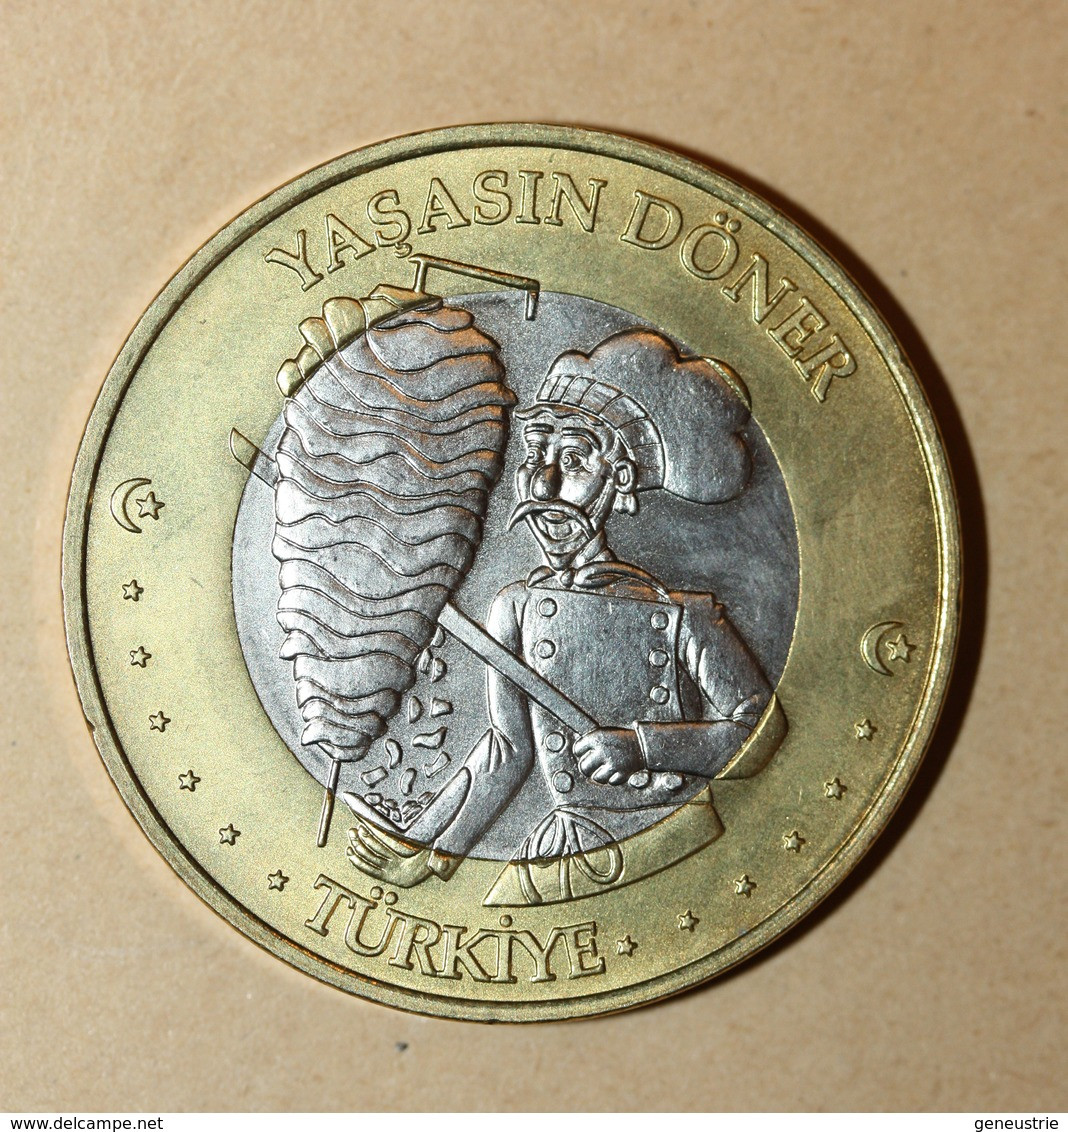 Monnaie Jeton De 3 Euros ? "Turkiye 2004 / Yasasin Döner" - Private Proofs / Unofficial